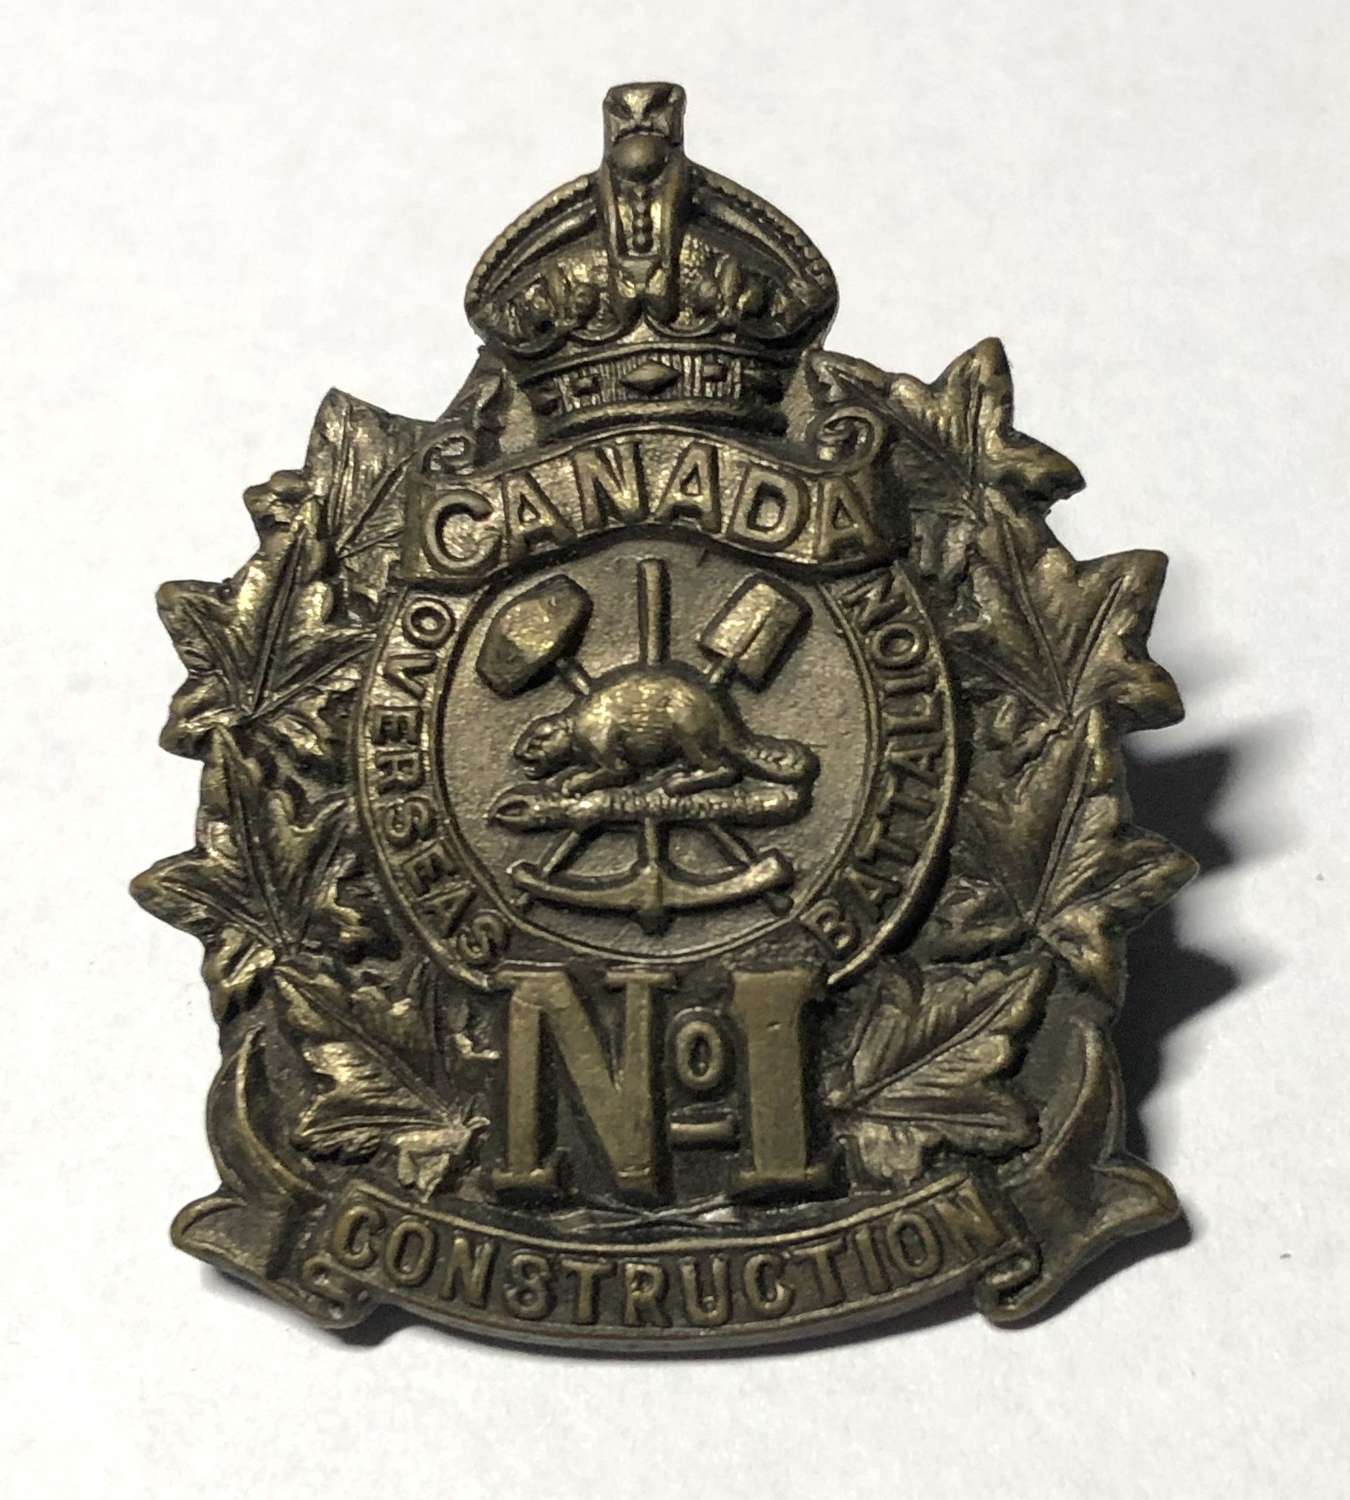 Canadian No.1 Railway Construction Battalion CEF WW1 cap badge